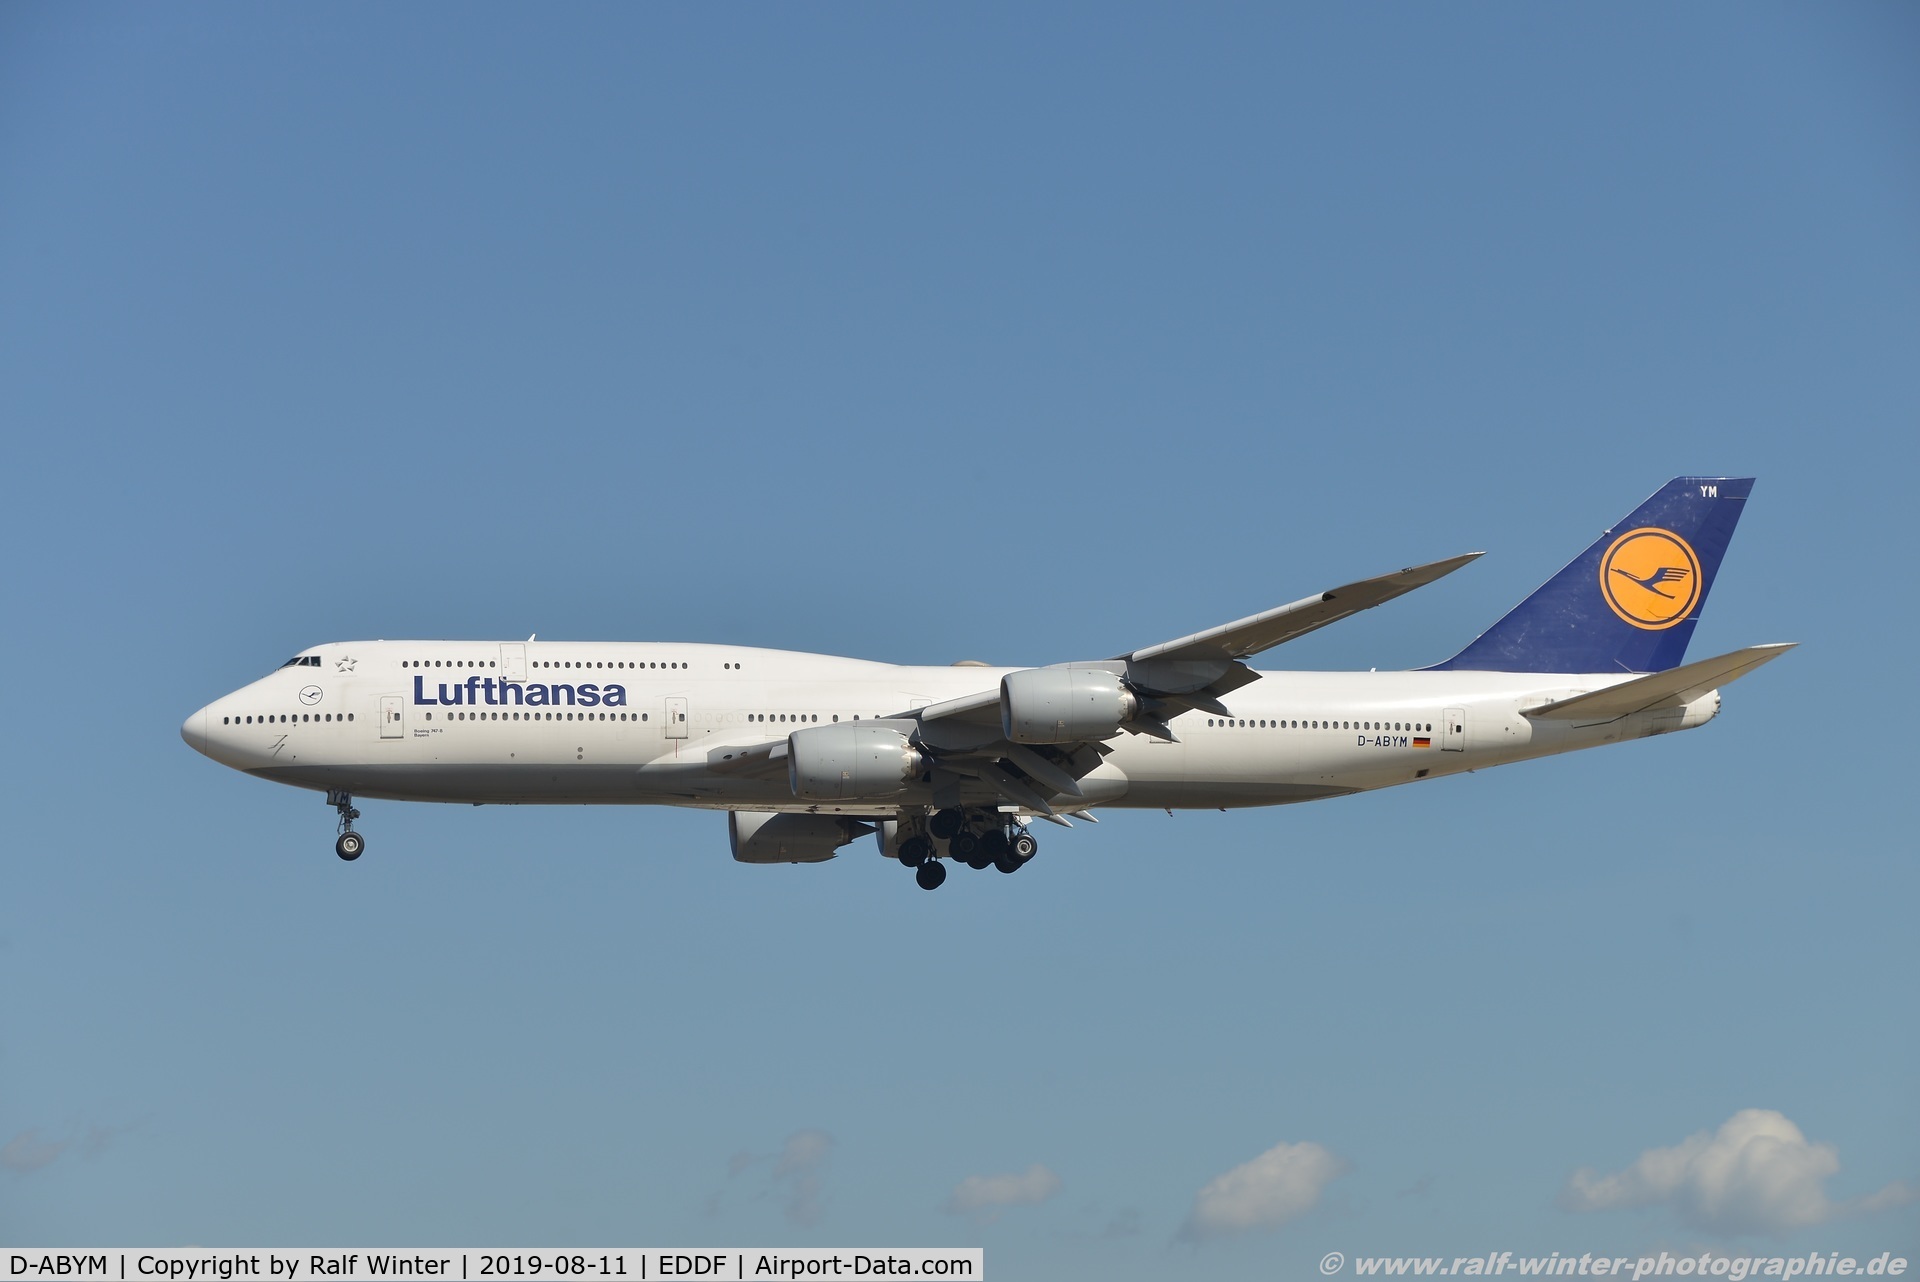 D-ABYM, 2014 Boeing 747-830 C/N 37837, Boeing 747-830 - LH DLH Lufthansa 'Bayern' - 37837 - D-ABYM - 11.08.2019 - FRA